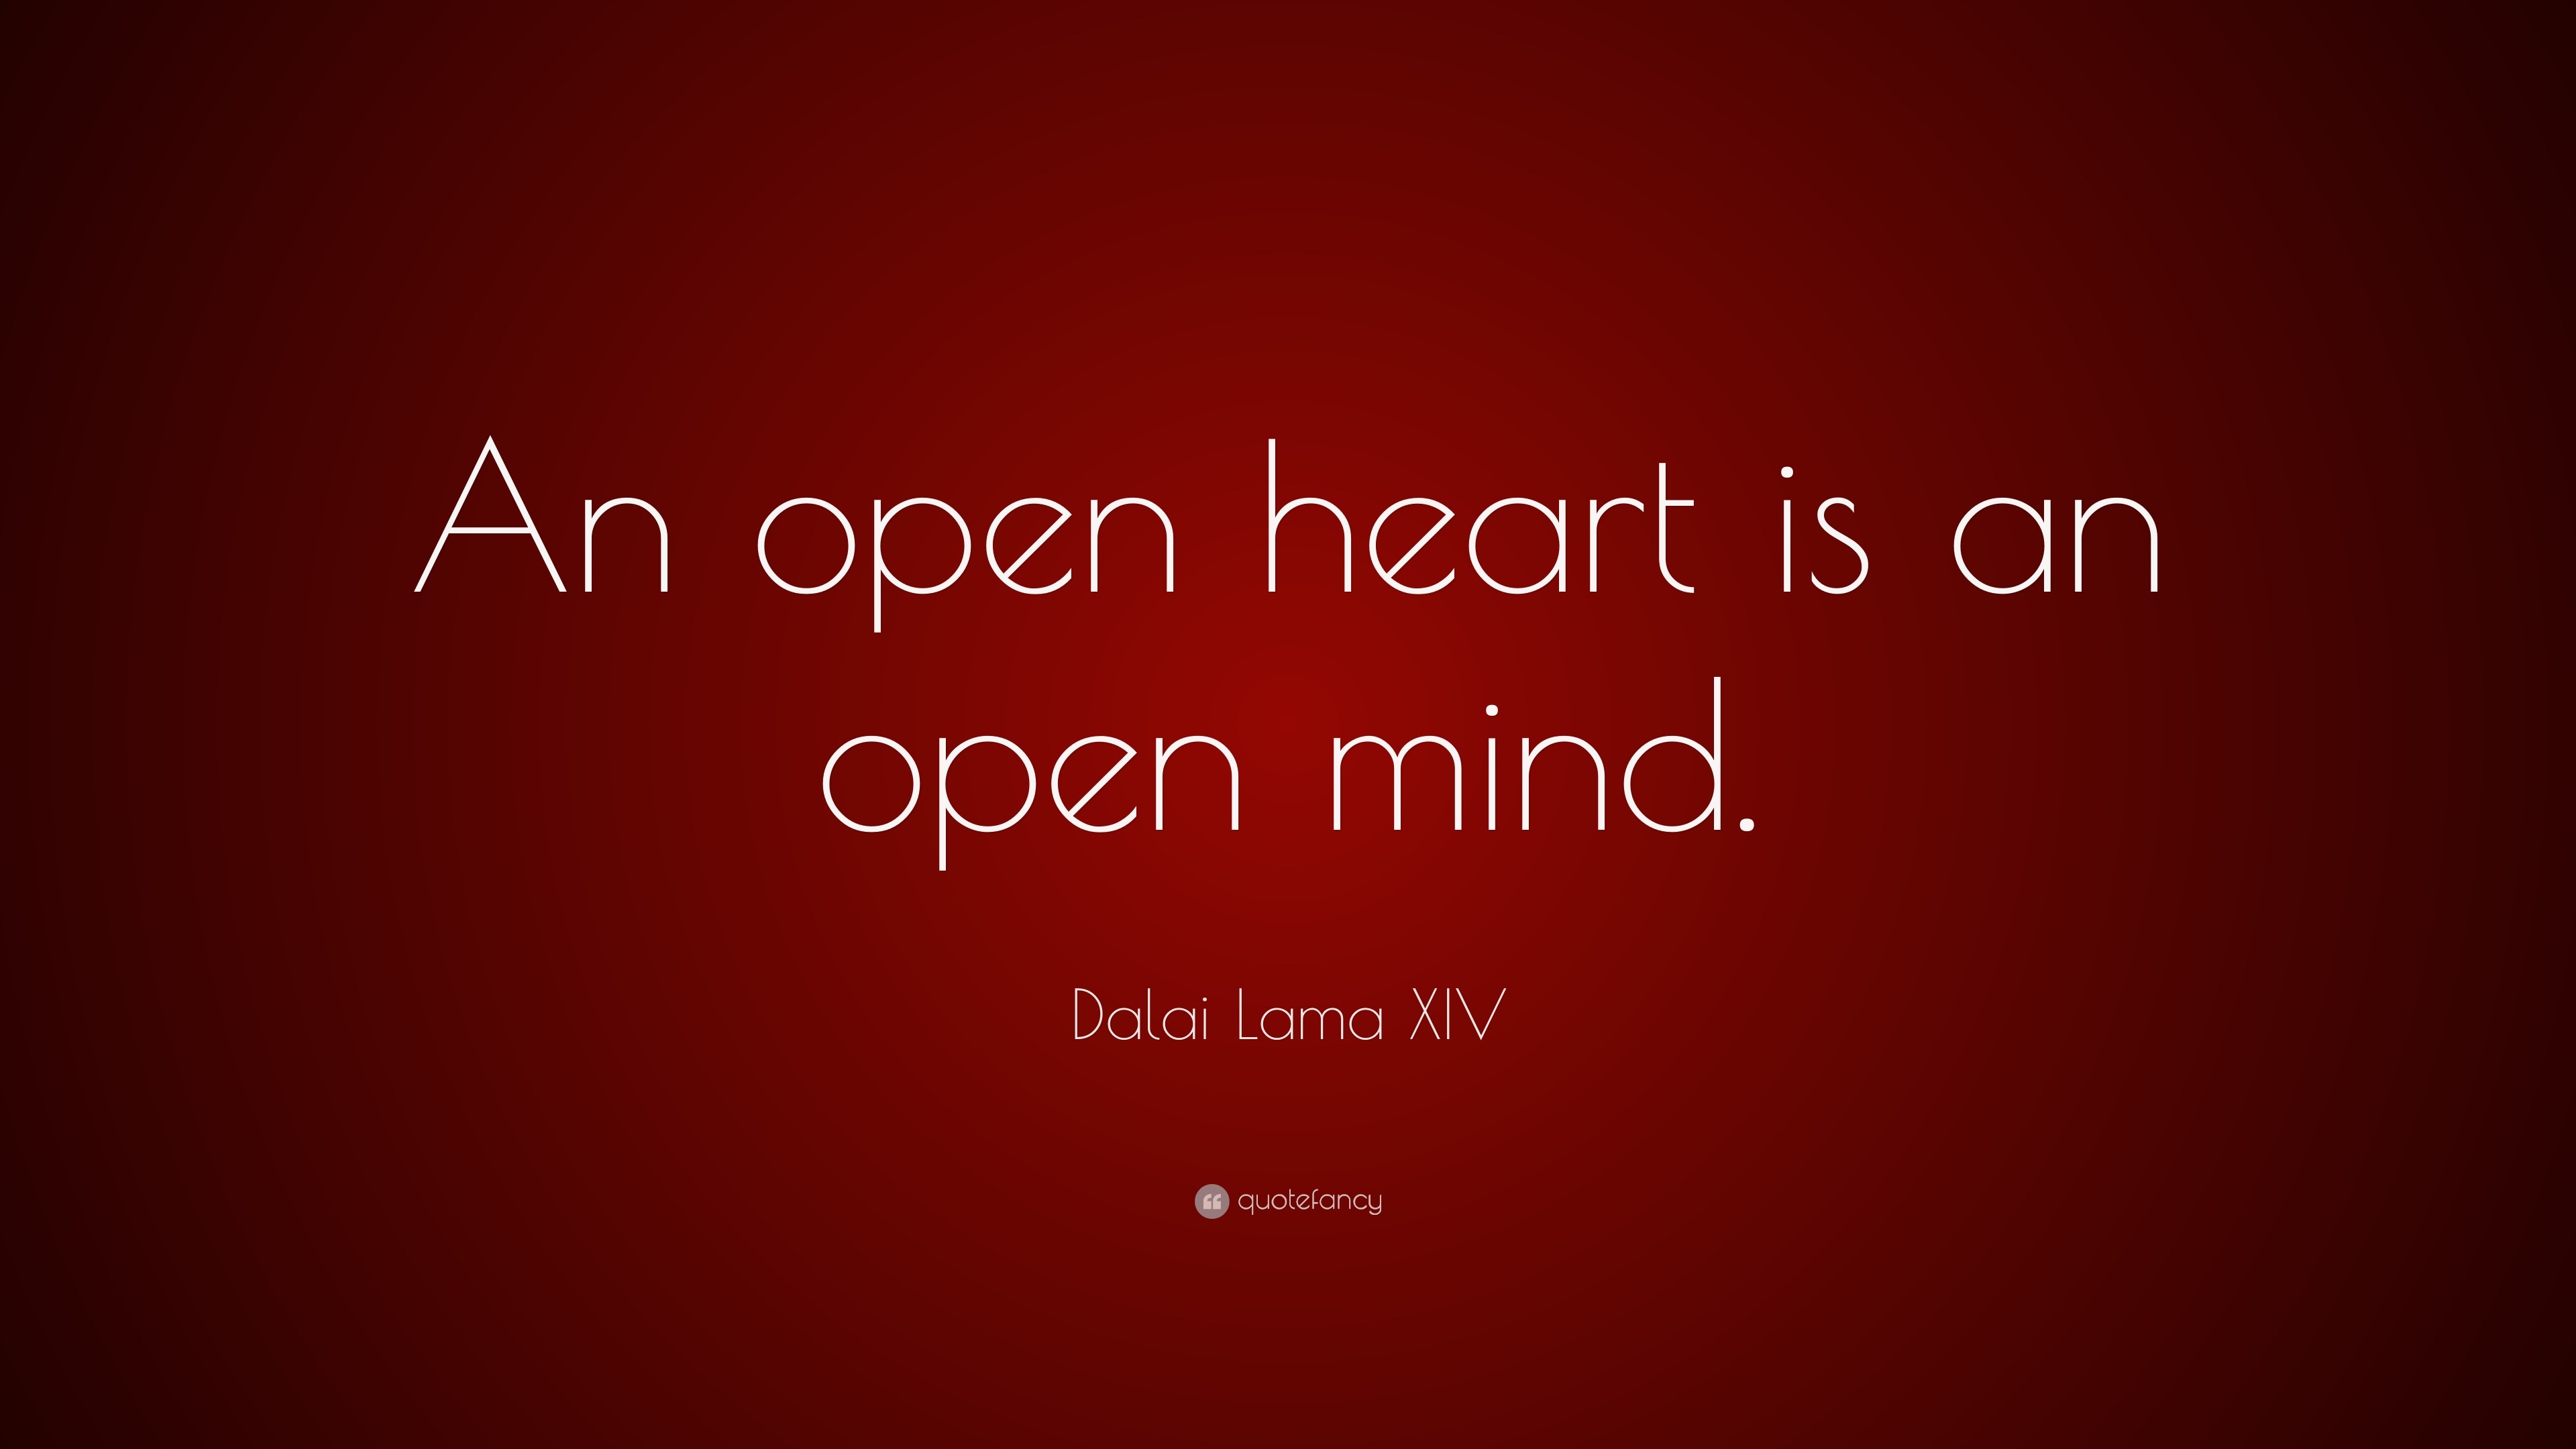 Dalai Lama XIV Quote: “An open heart is an open mind.” (21 ...